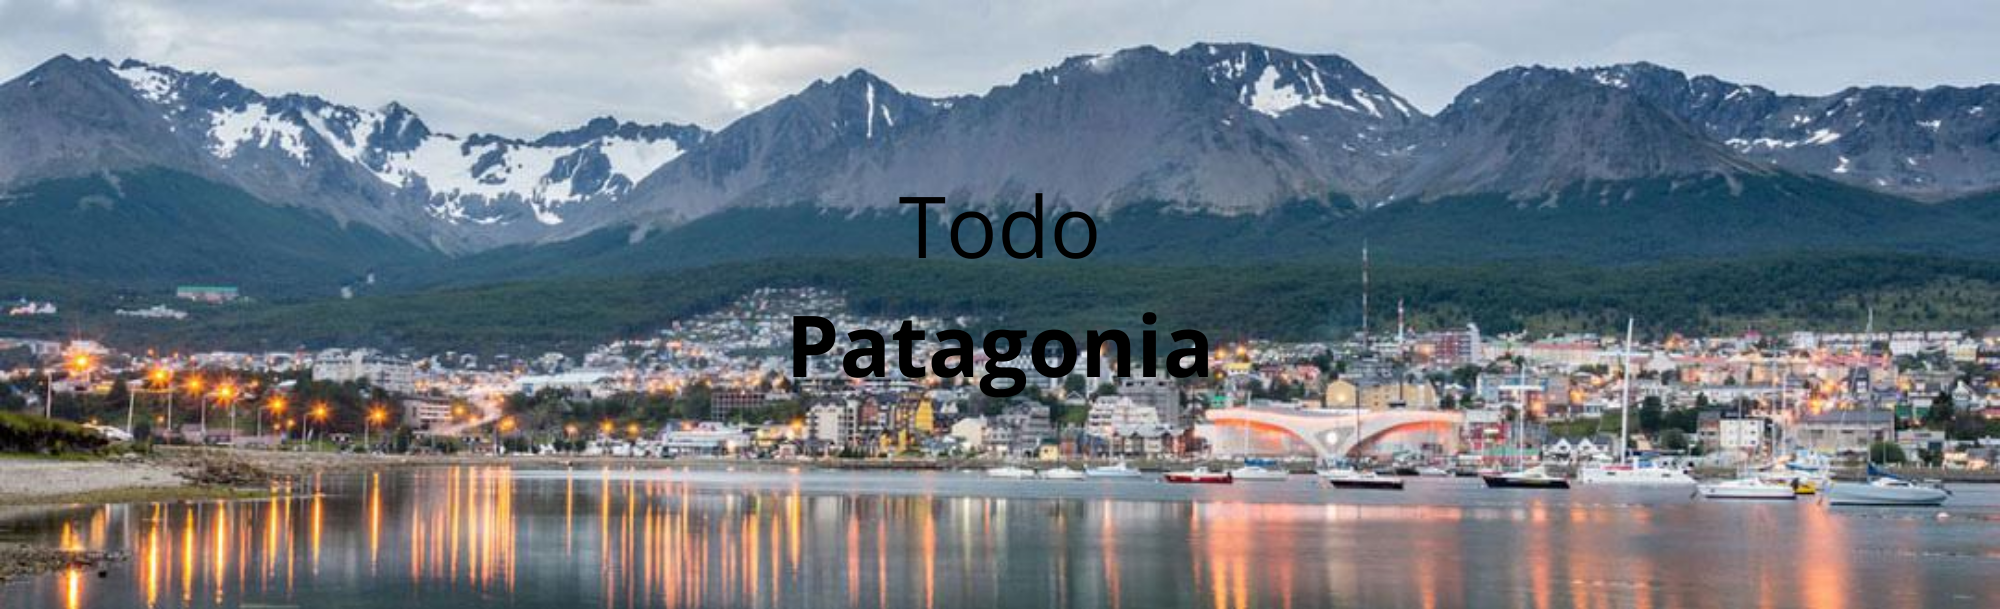 Todo Patagonia